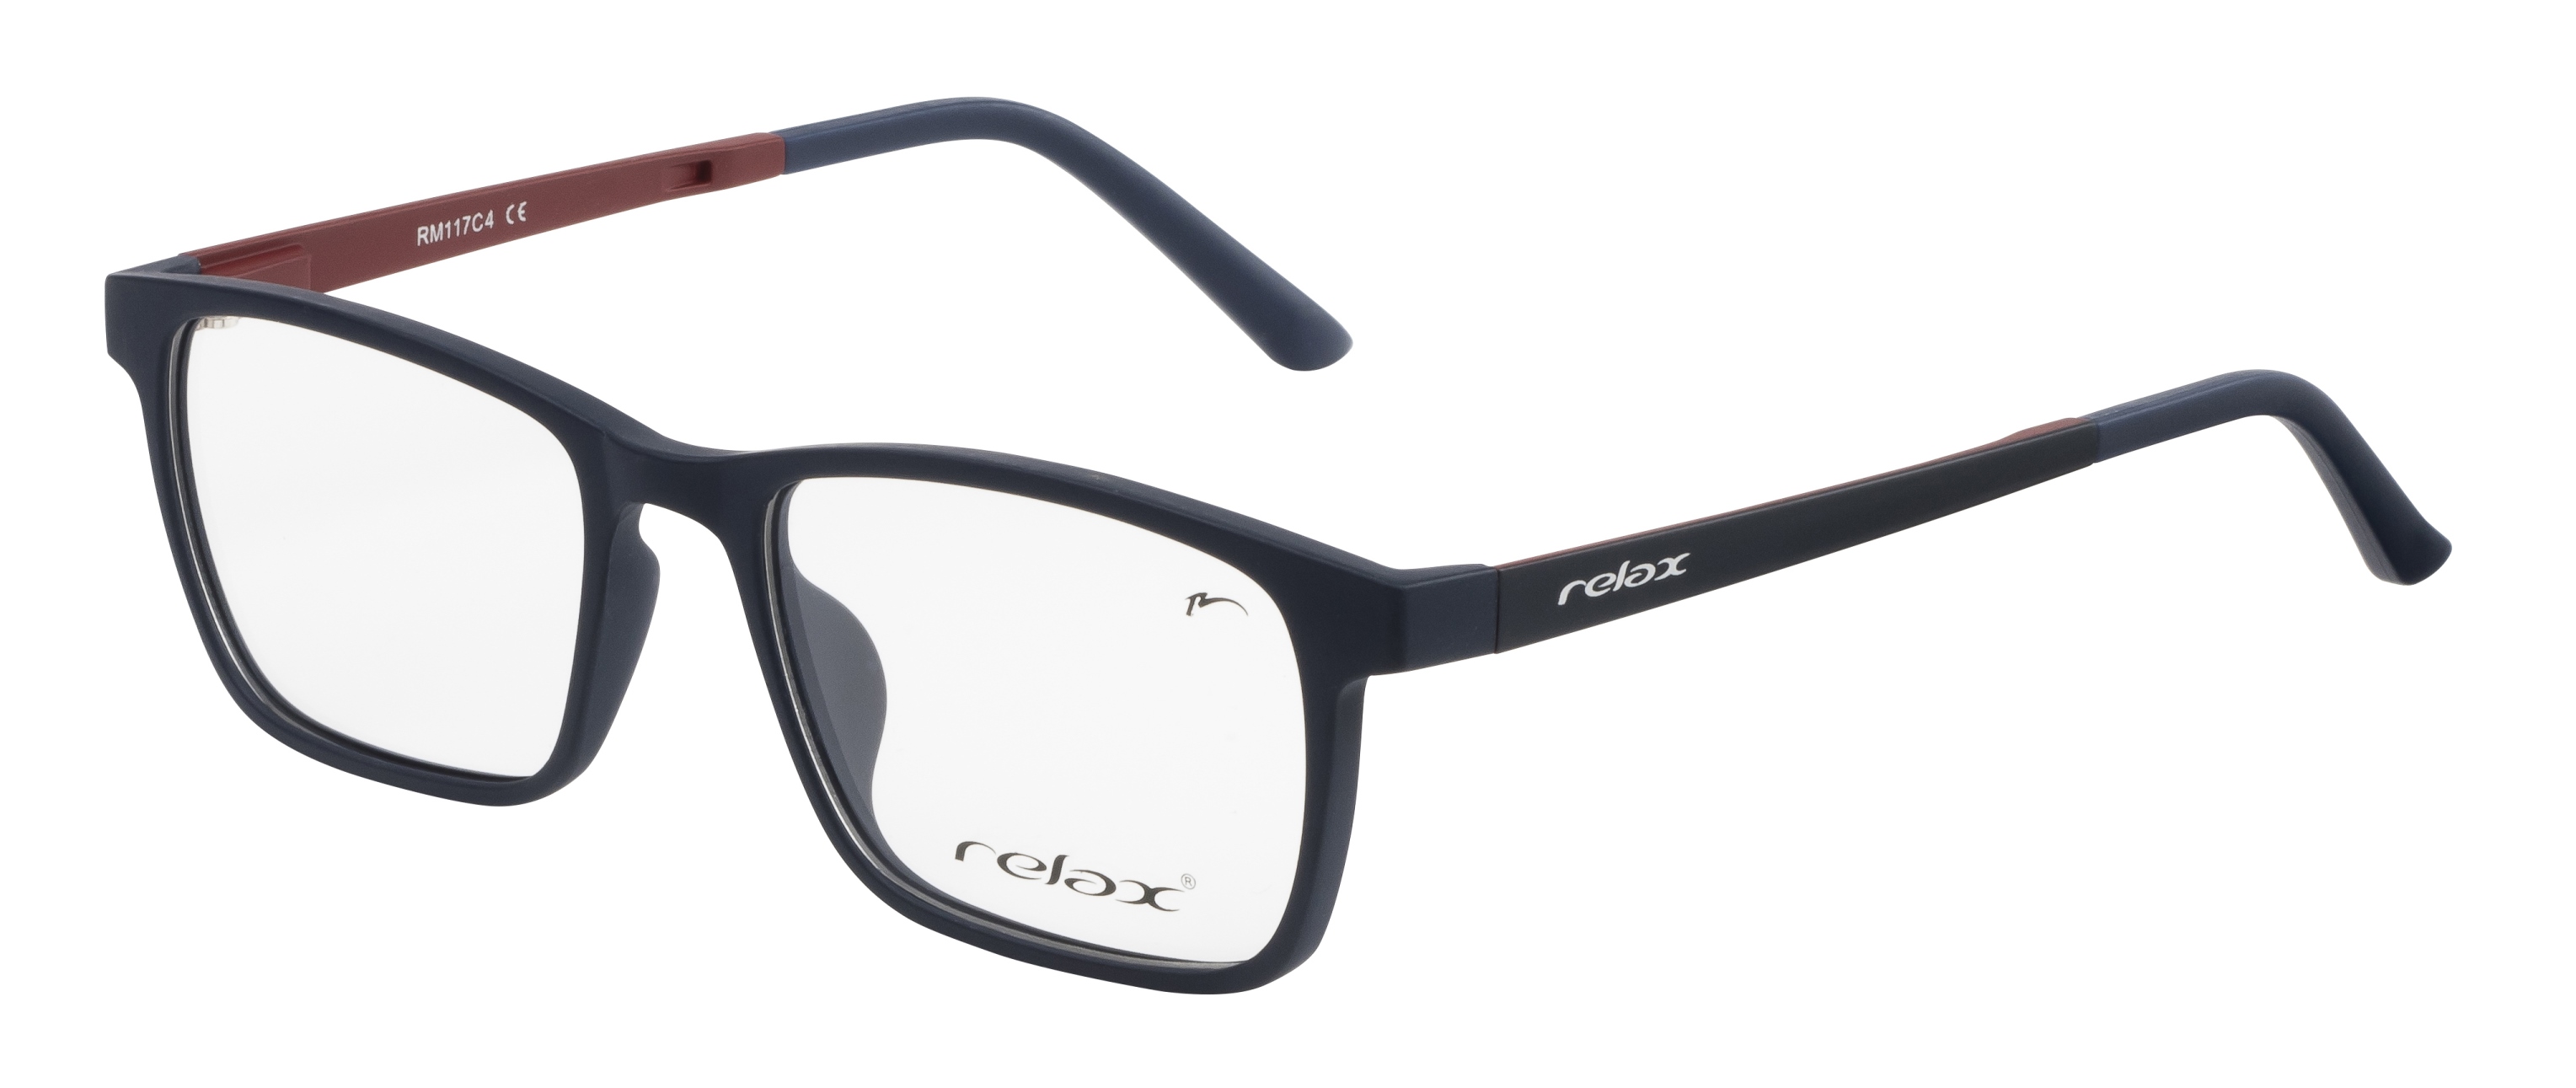 Optical frames Relax Pixie RM117C4